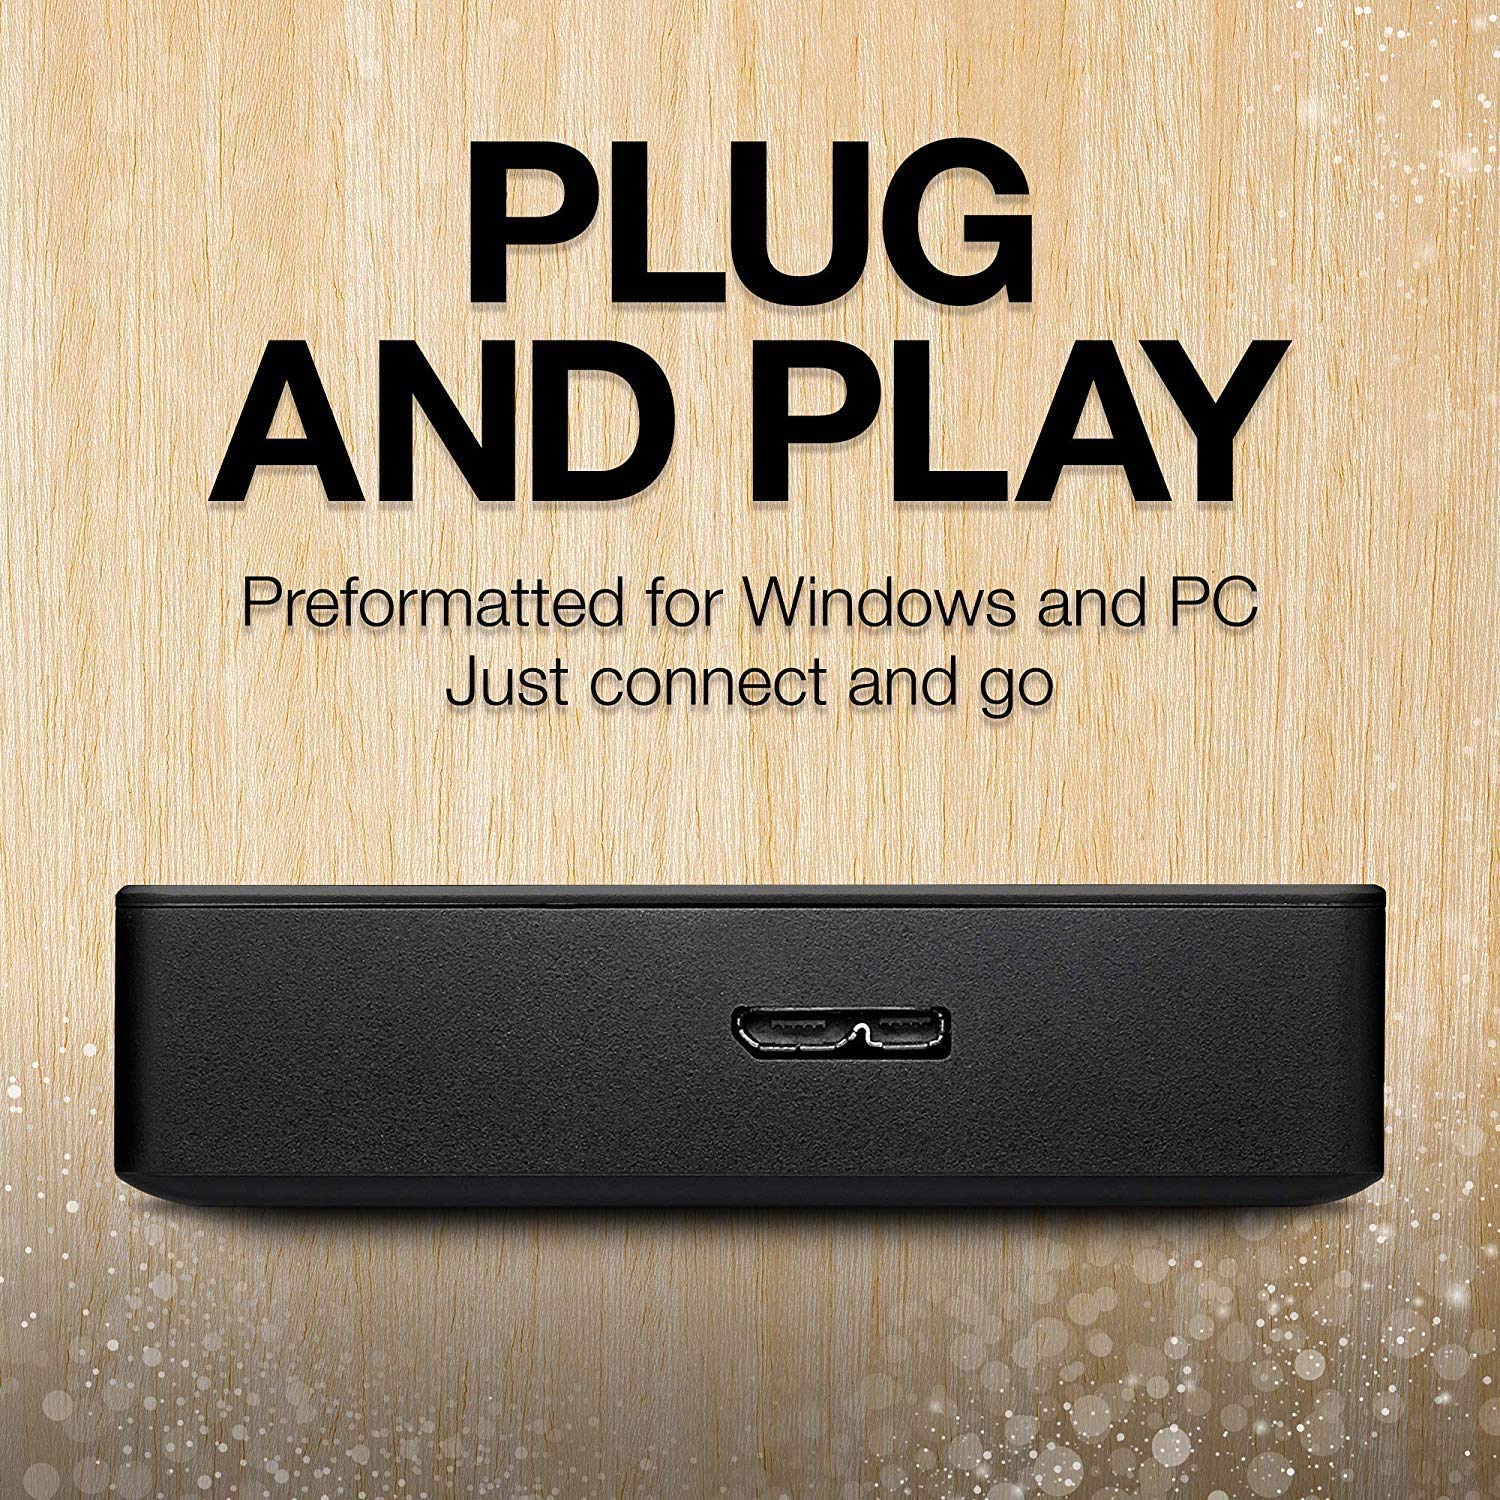 Seagate Portable 5TB External Hard Drive HDD – USB 3.0 (STGX5000400), Black (7947231232238)